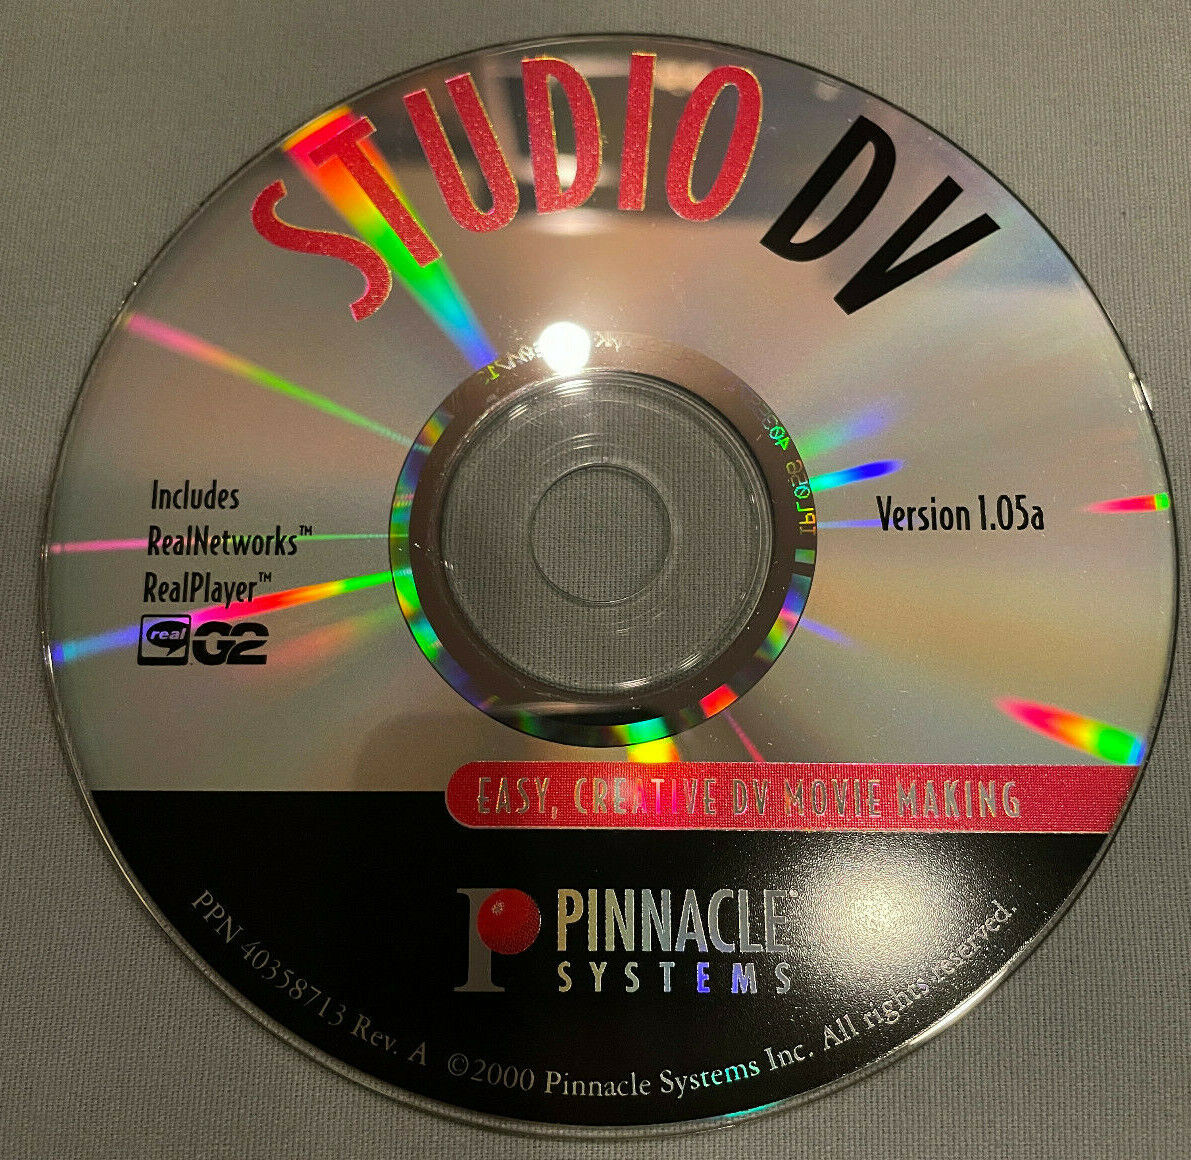 Studio DV Version 1.05a - PC Computer Pinnacle Systems Movie Making Software CD